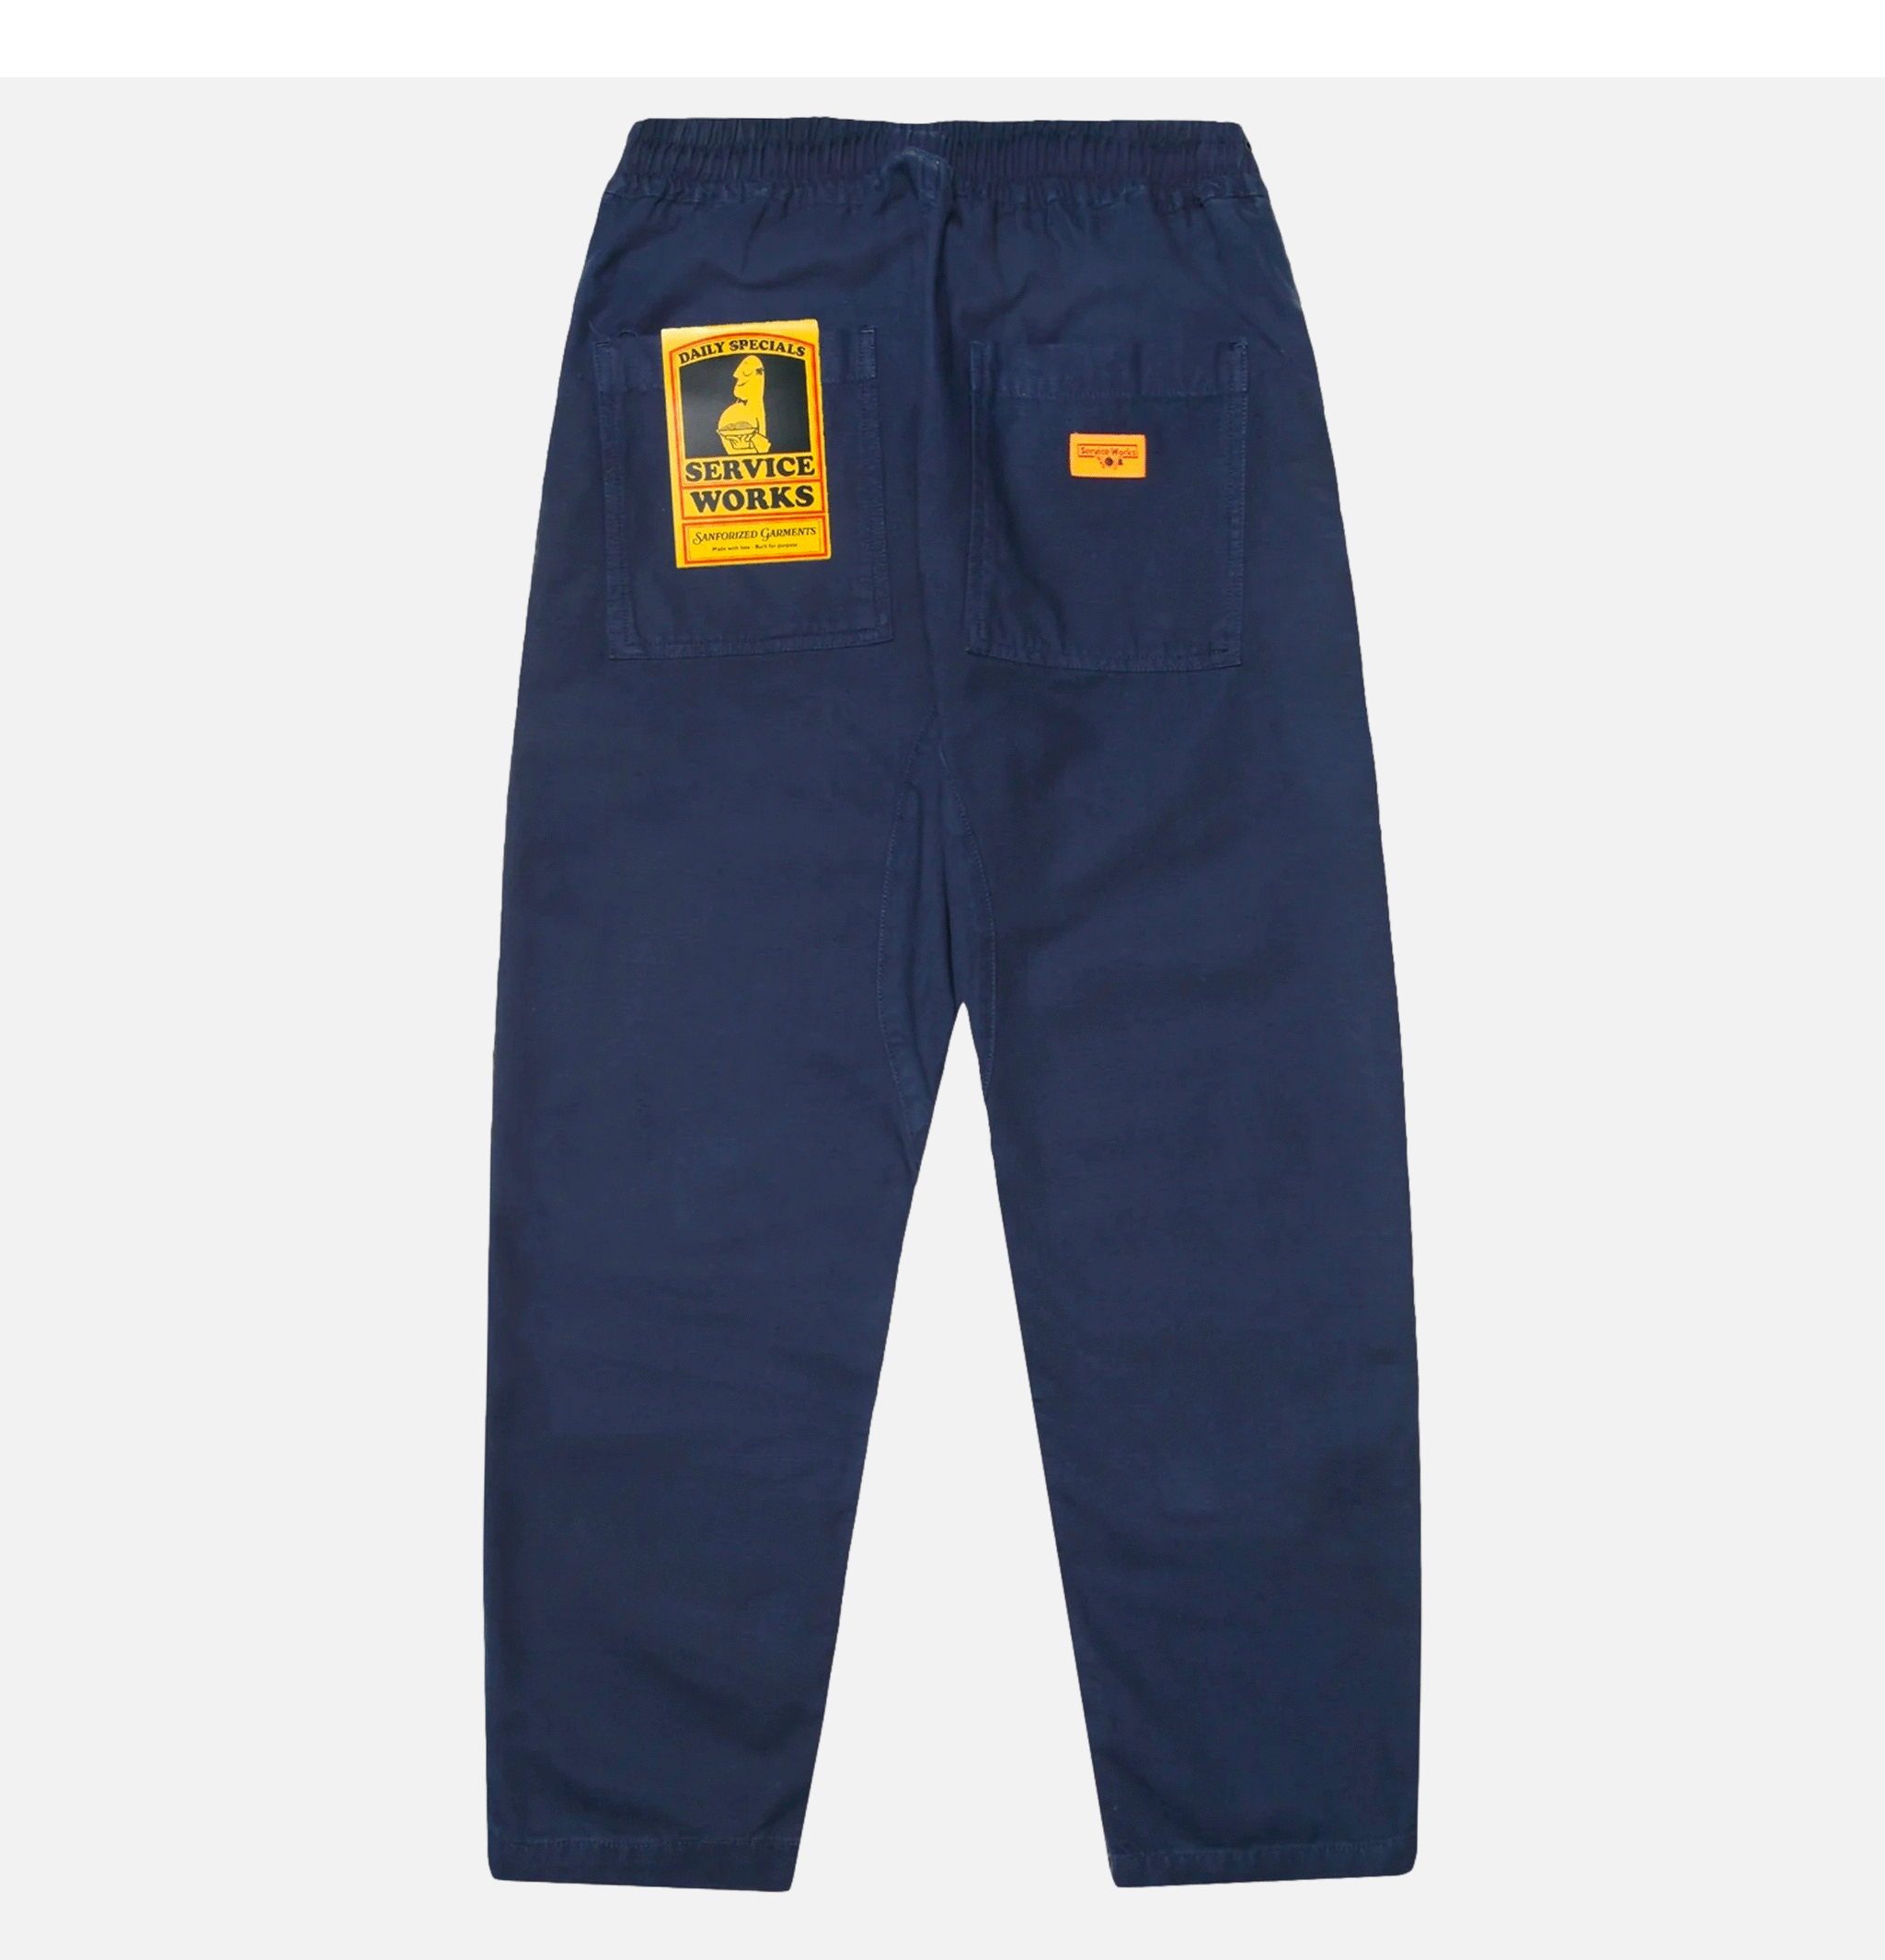 Service Works Navy pants